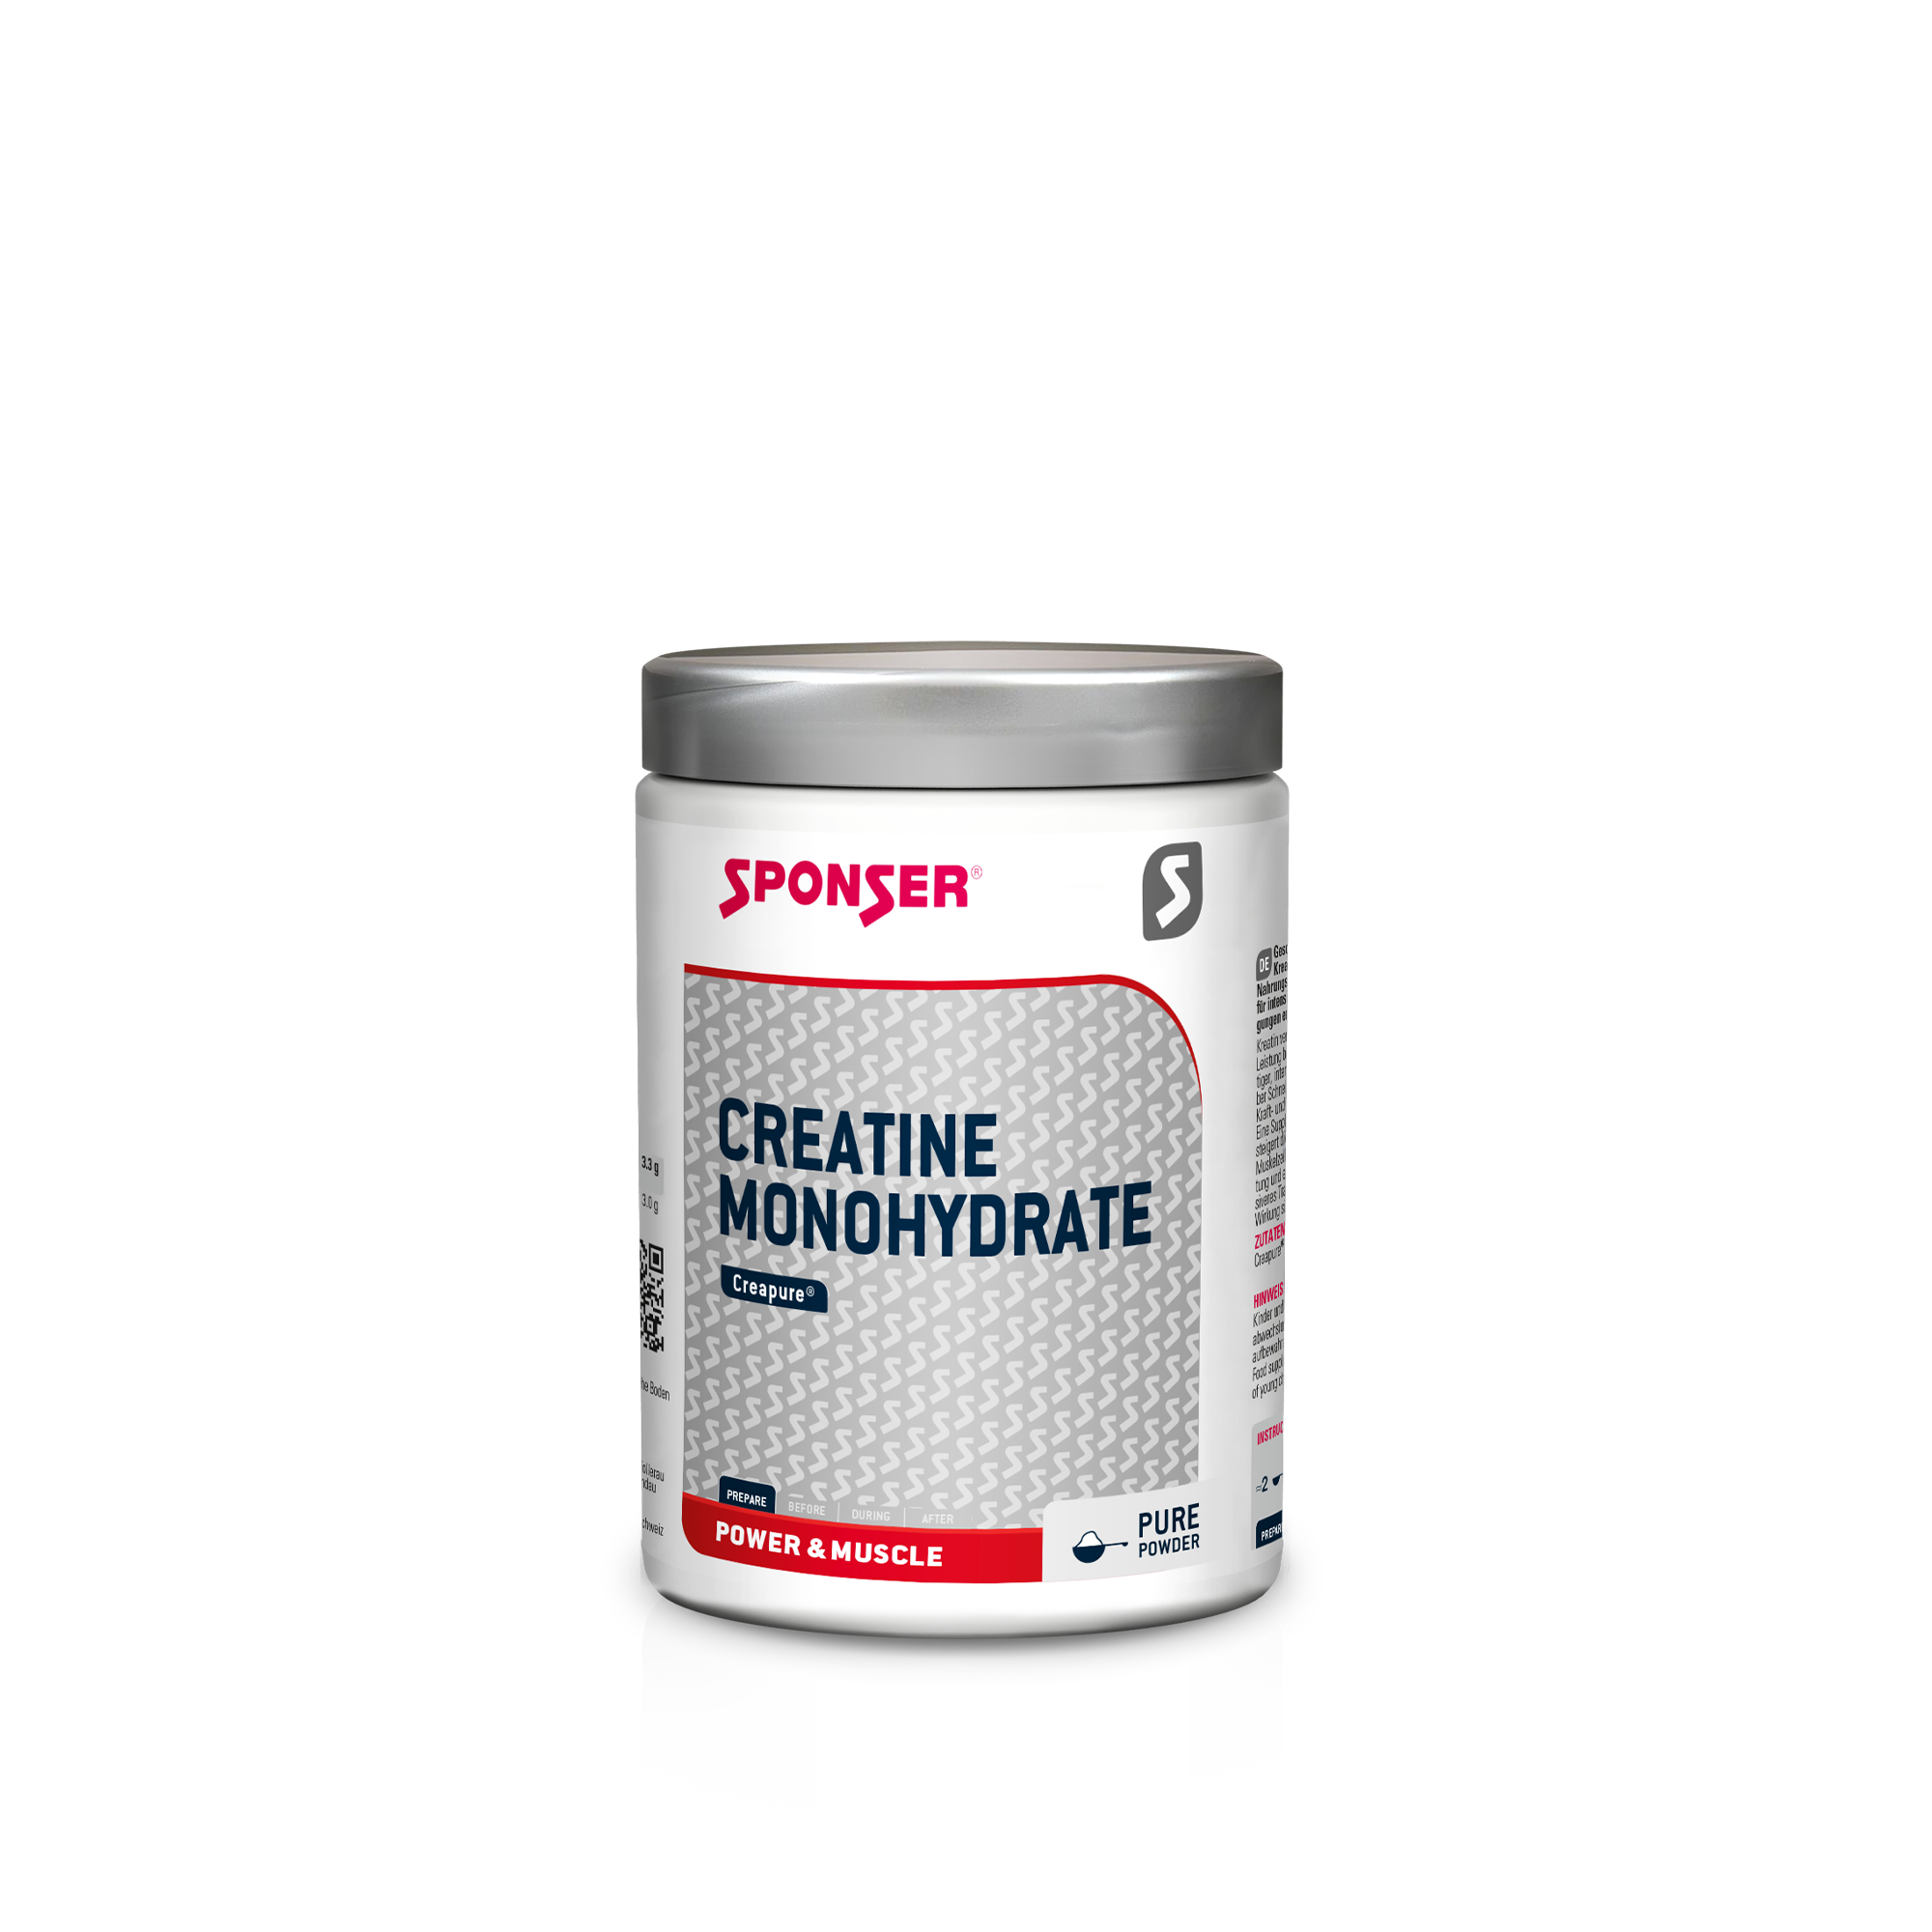 Sponser Creatine Monohydrate 500 g.